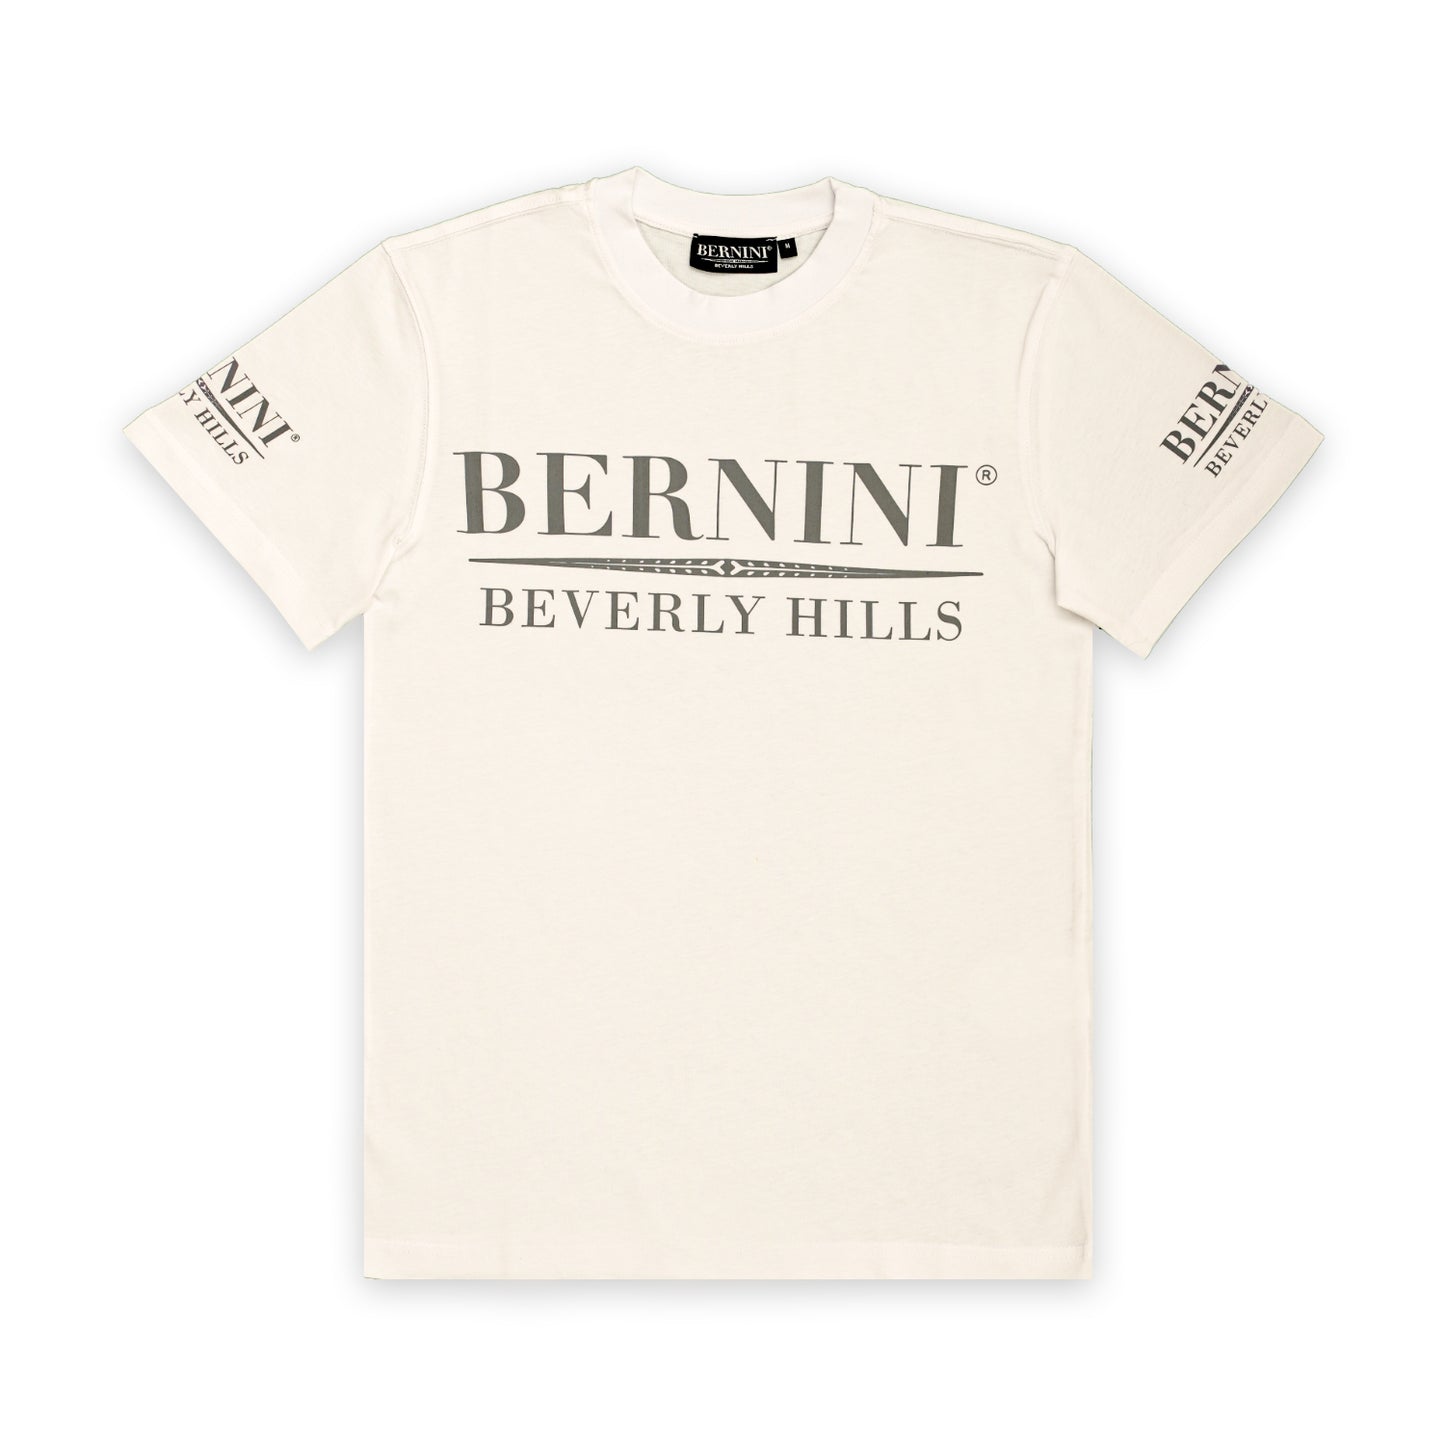 BERNINI BEVERLY HILLS T-SHIRT